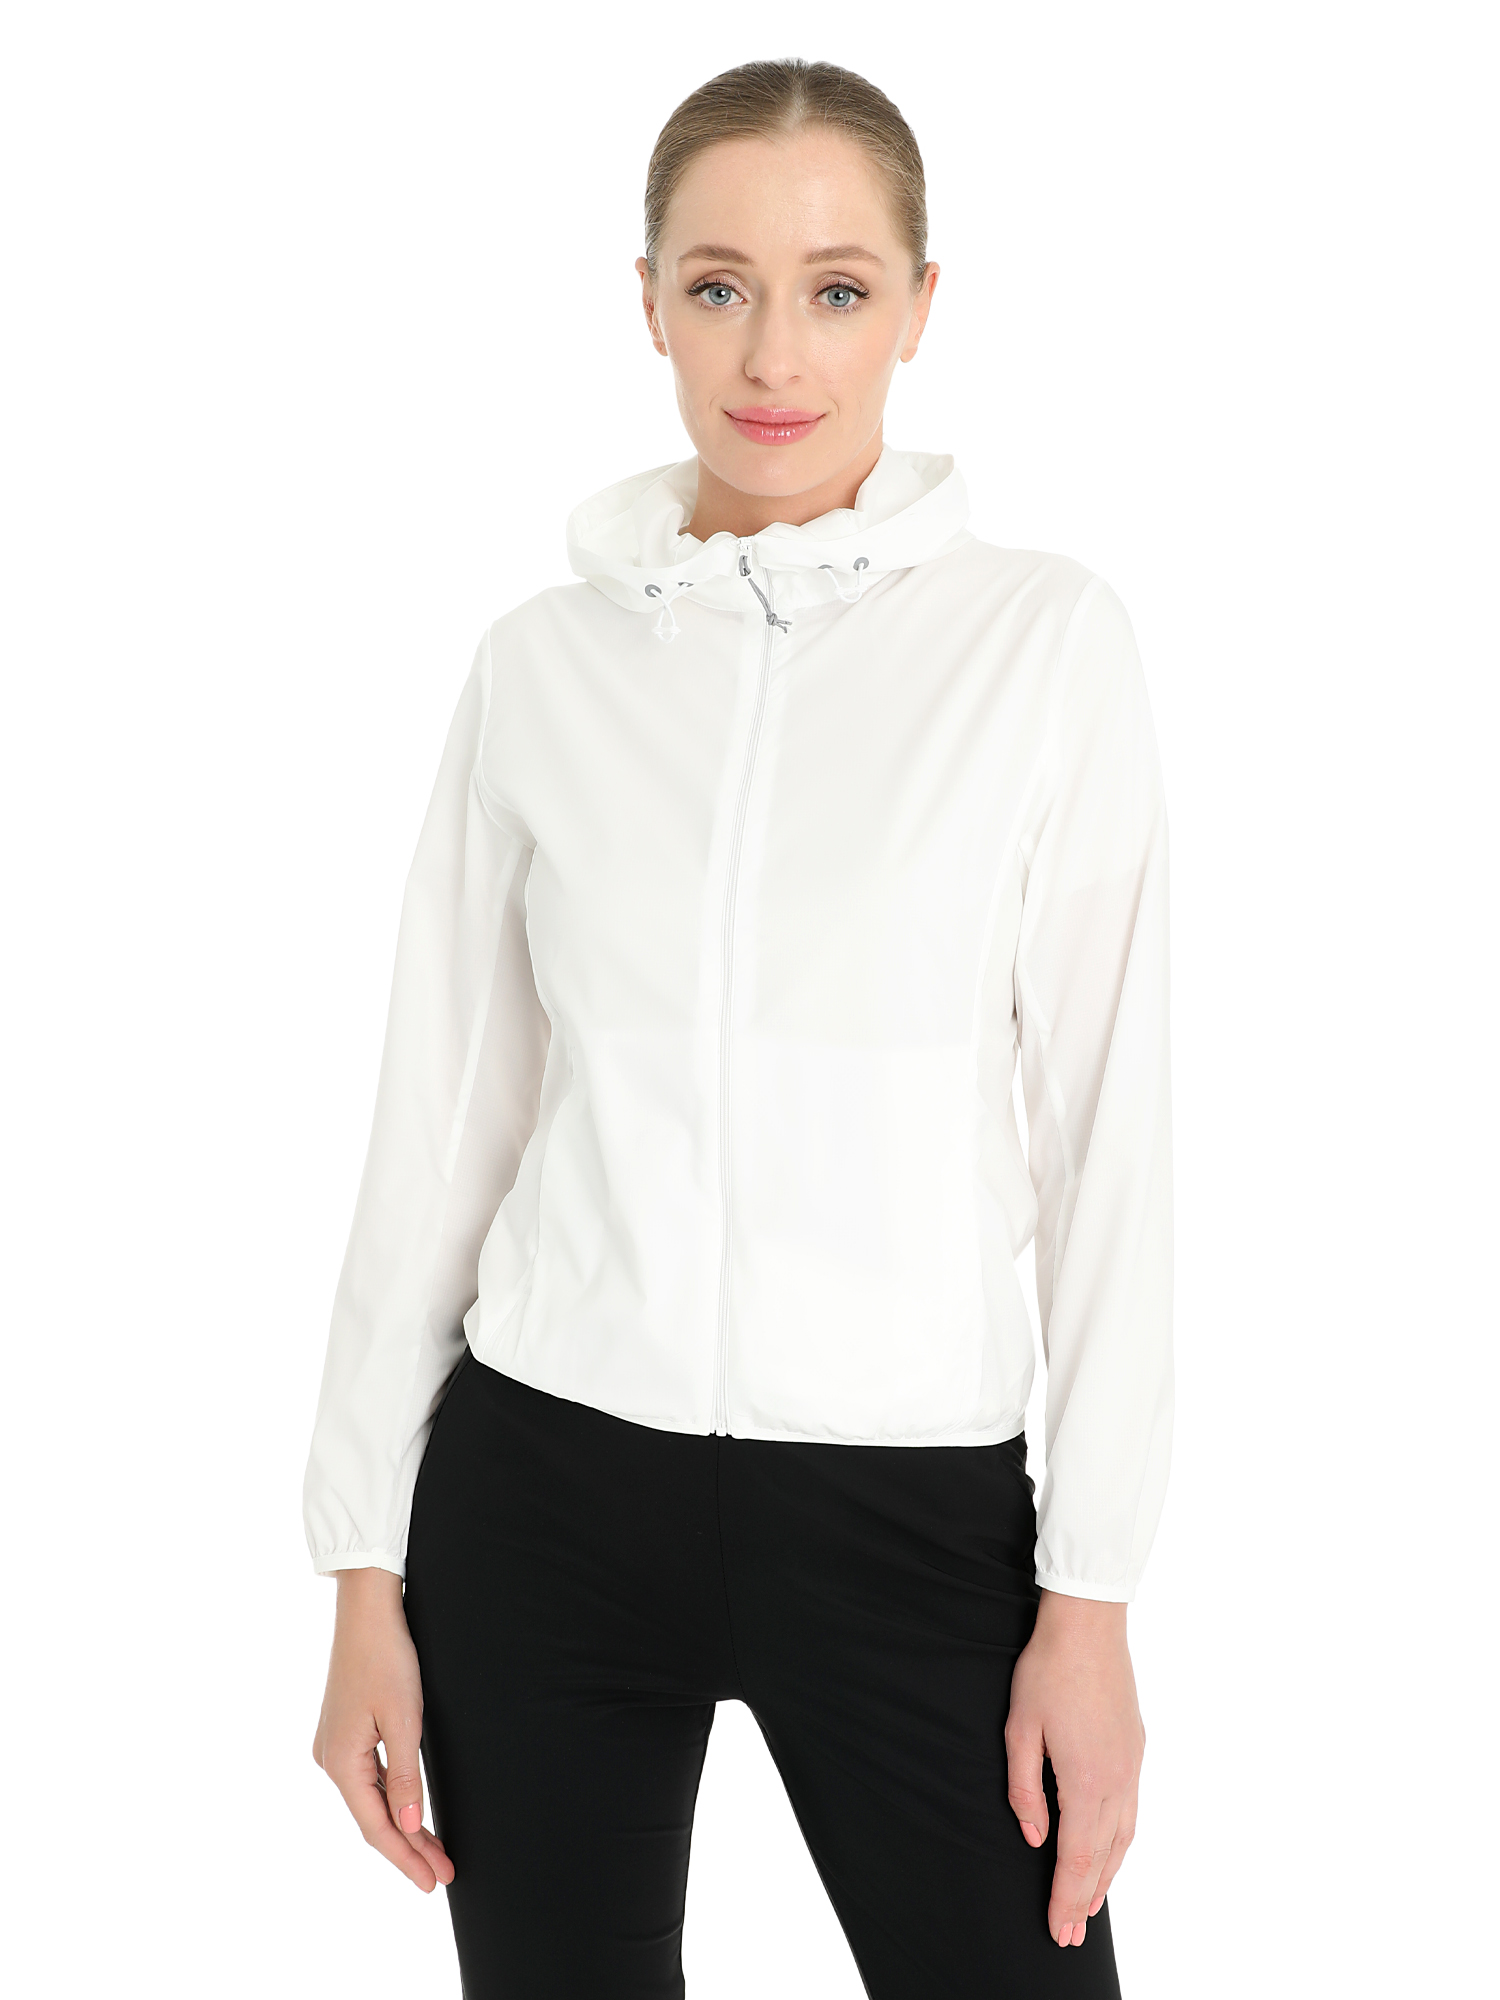 Куртка женская Toread Women's Skin Jacket белая XS